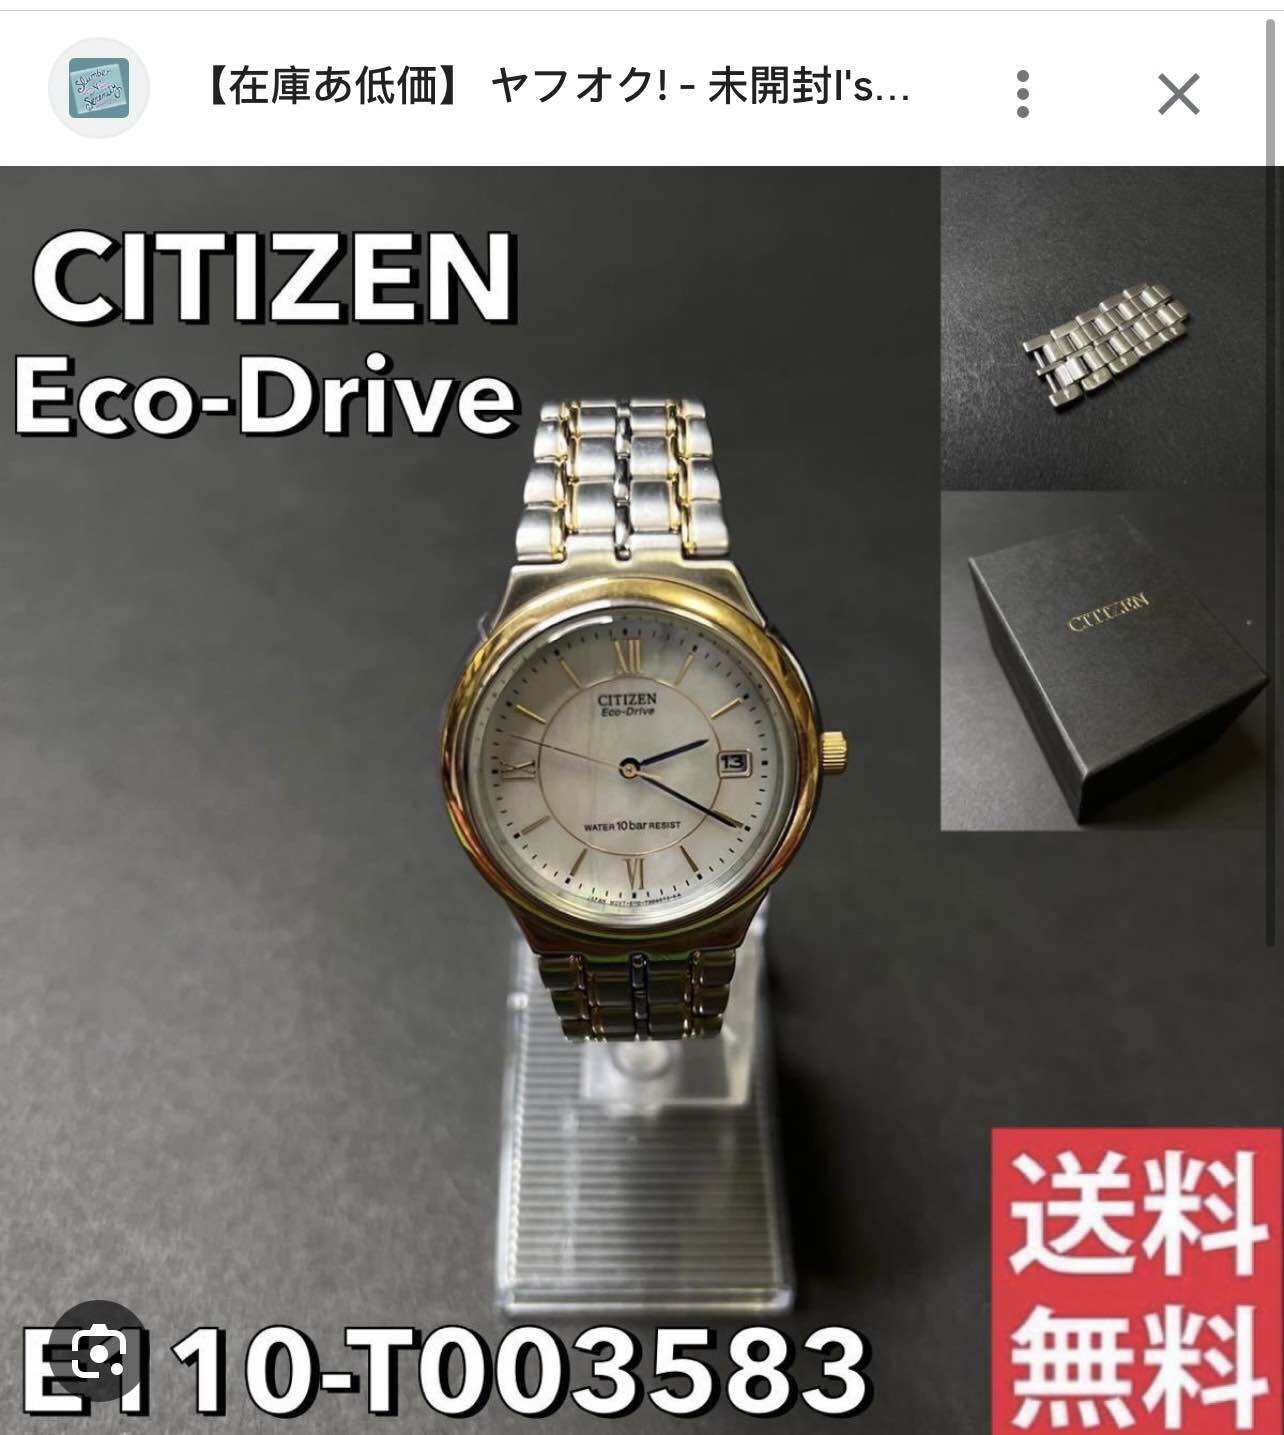 Citizen eco drive 36mm